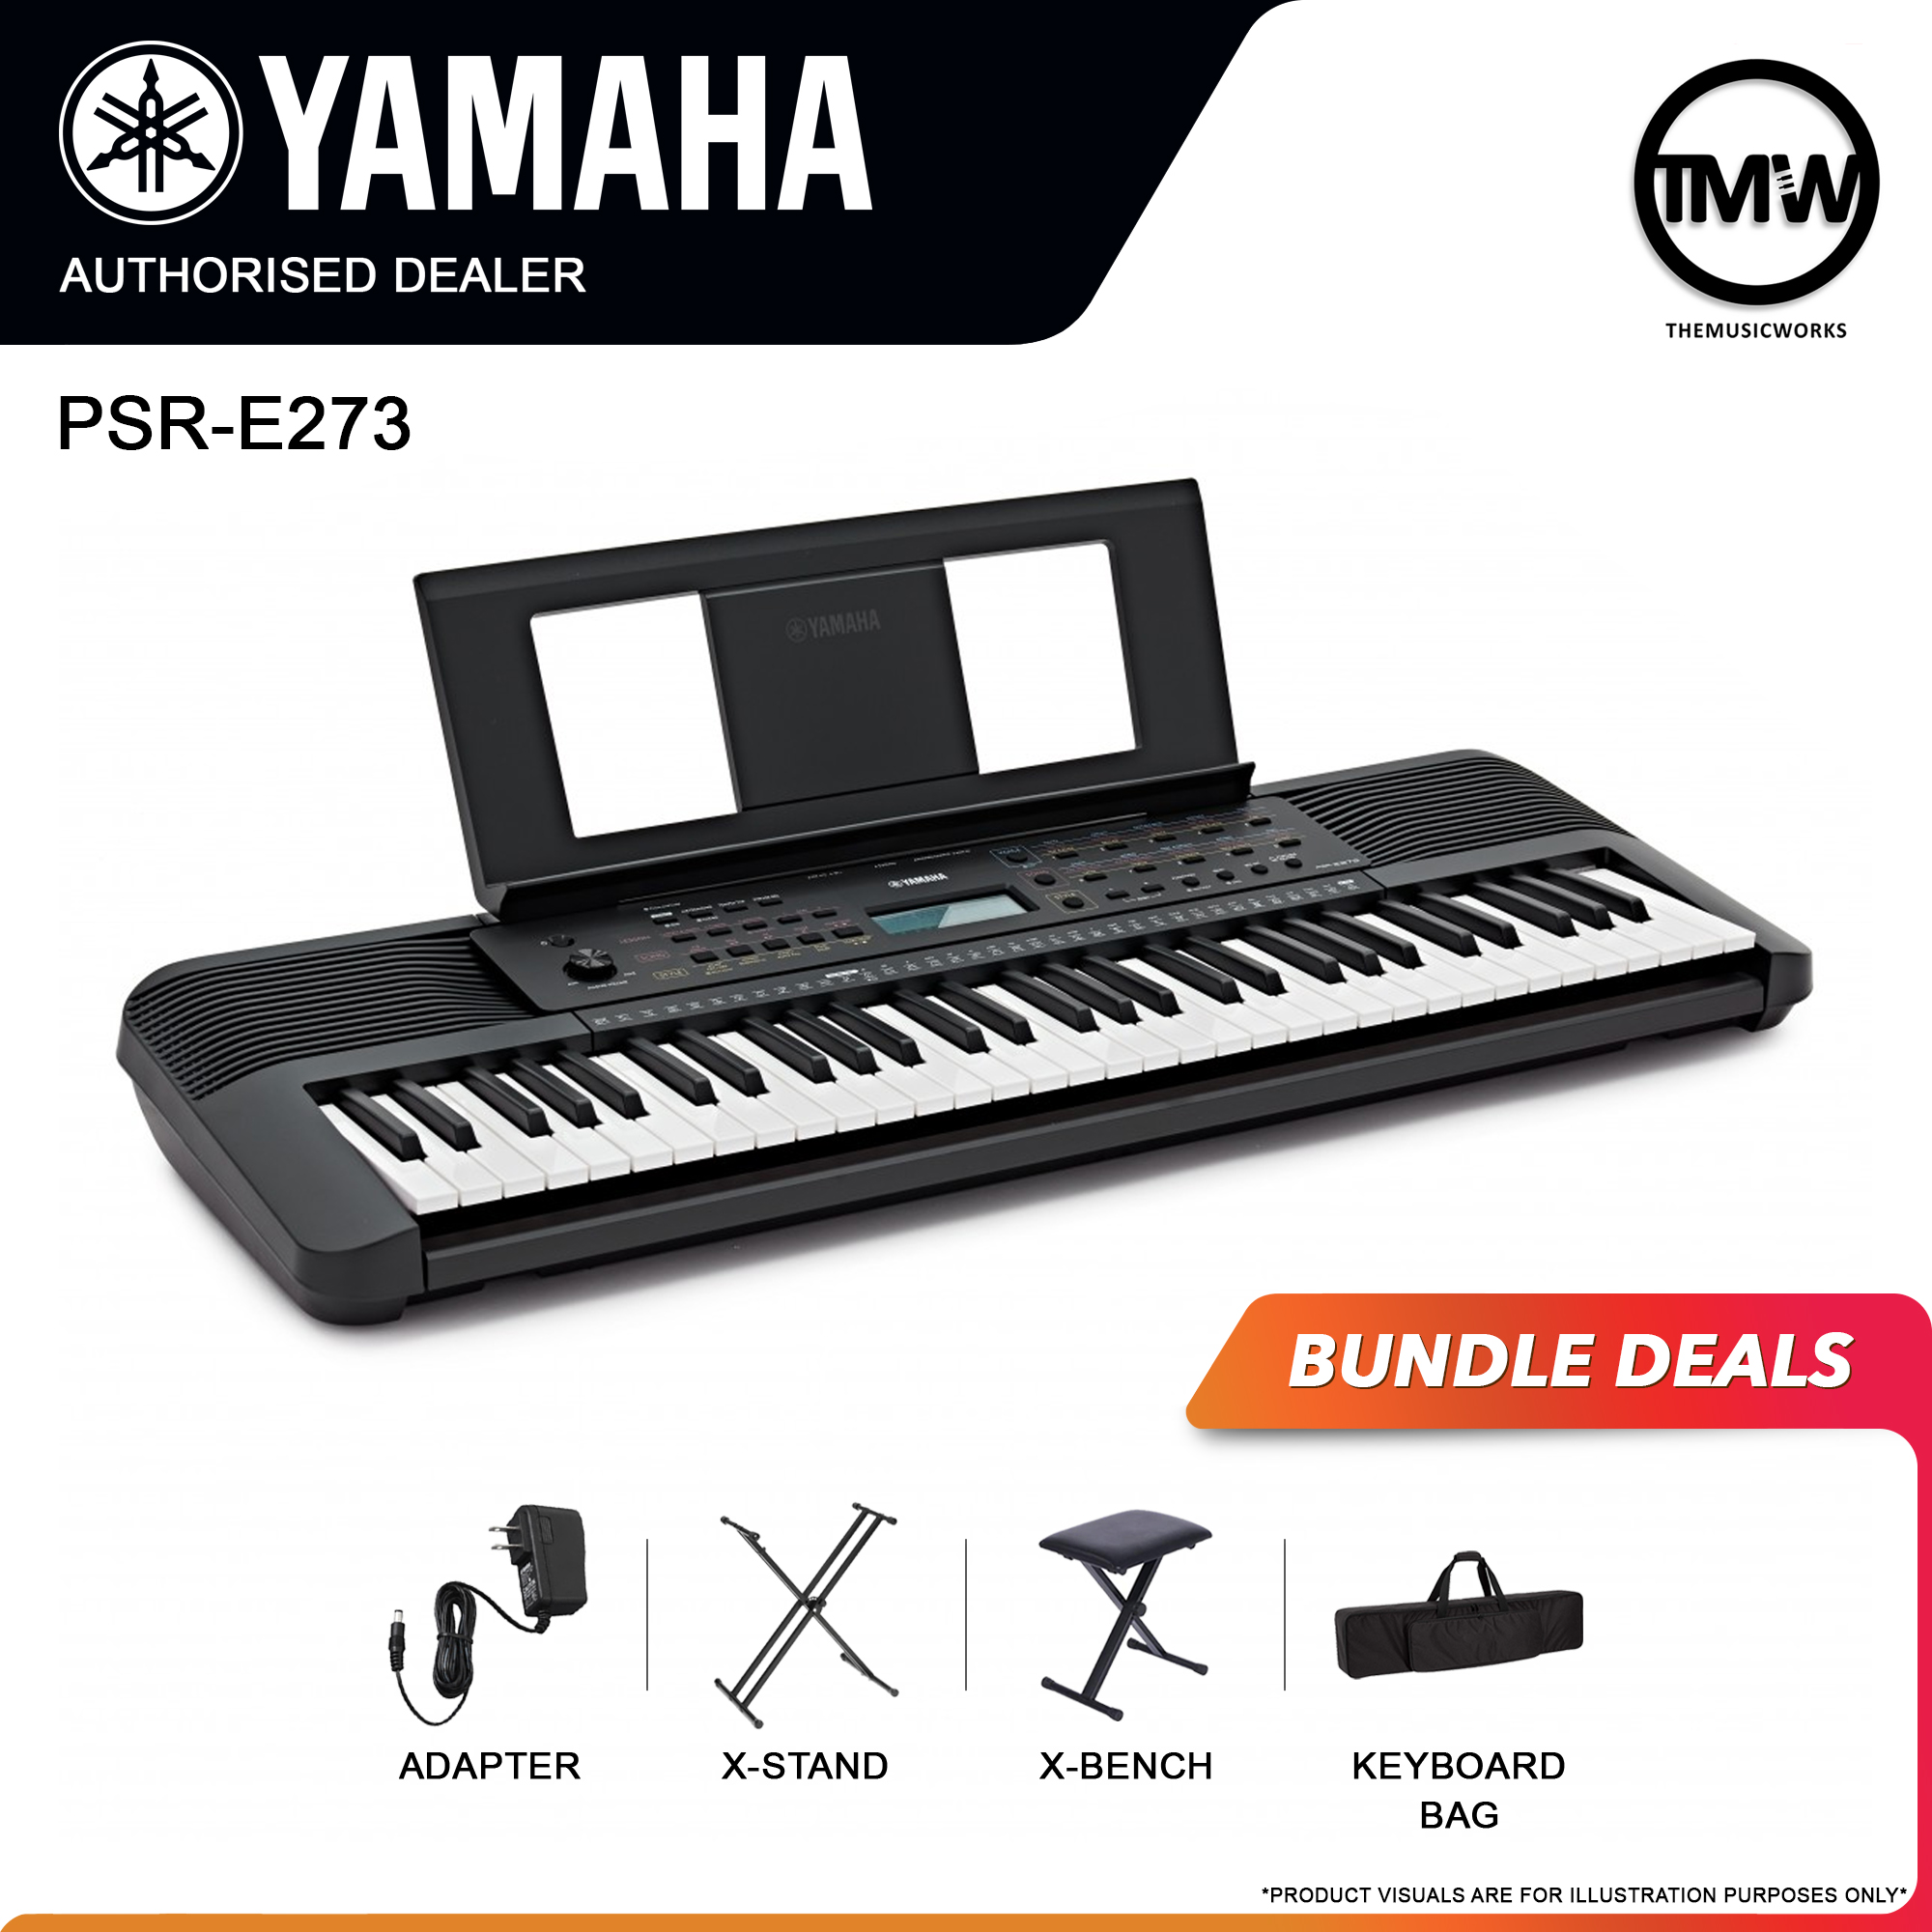 yamaha psr-e273 electronic keyboard piano singapore with adapter, x-stand, x-bench, bag, tmw